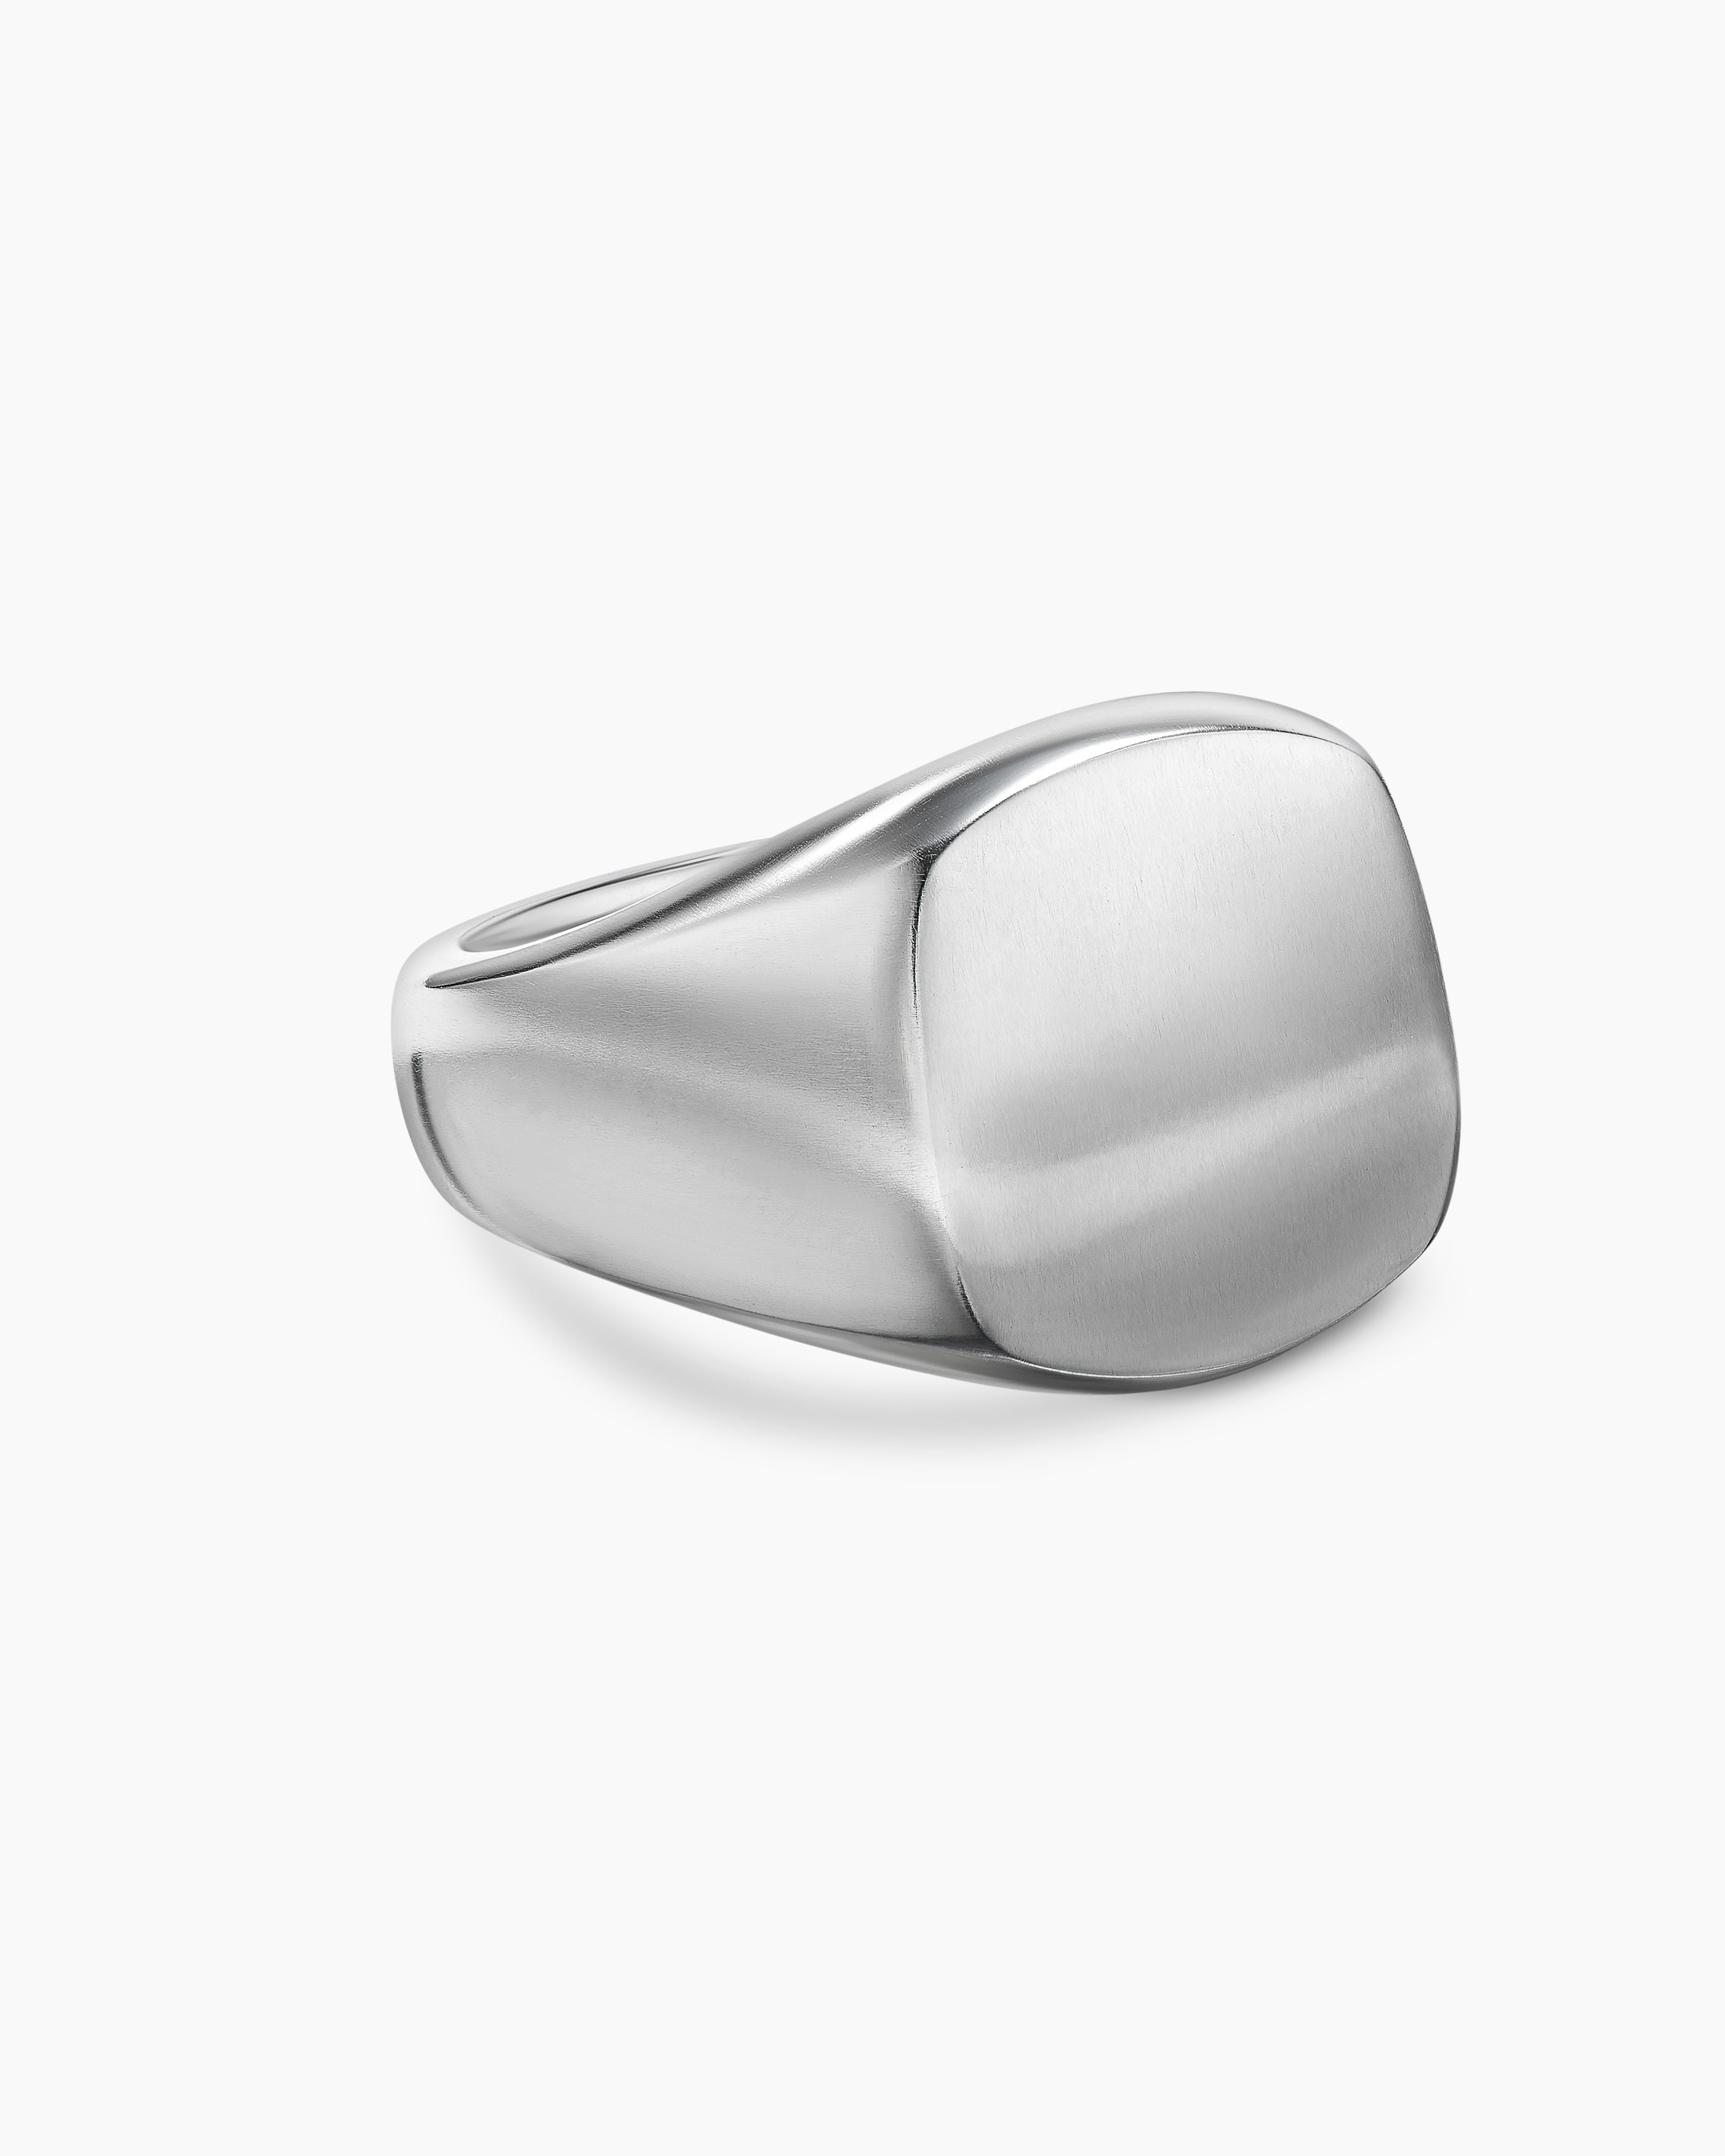 Streamline Pinky Ring in Sterling Silver, 13mm | David Yurman Canada